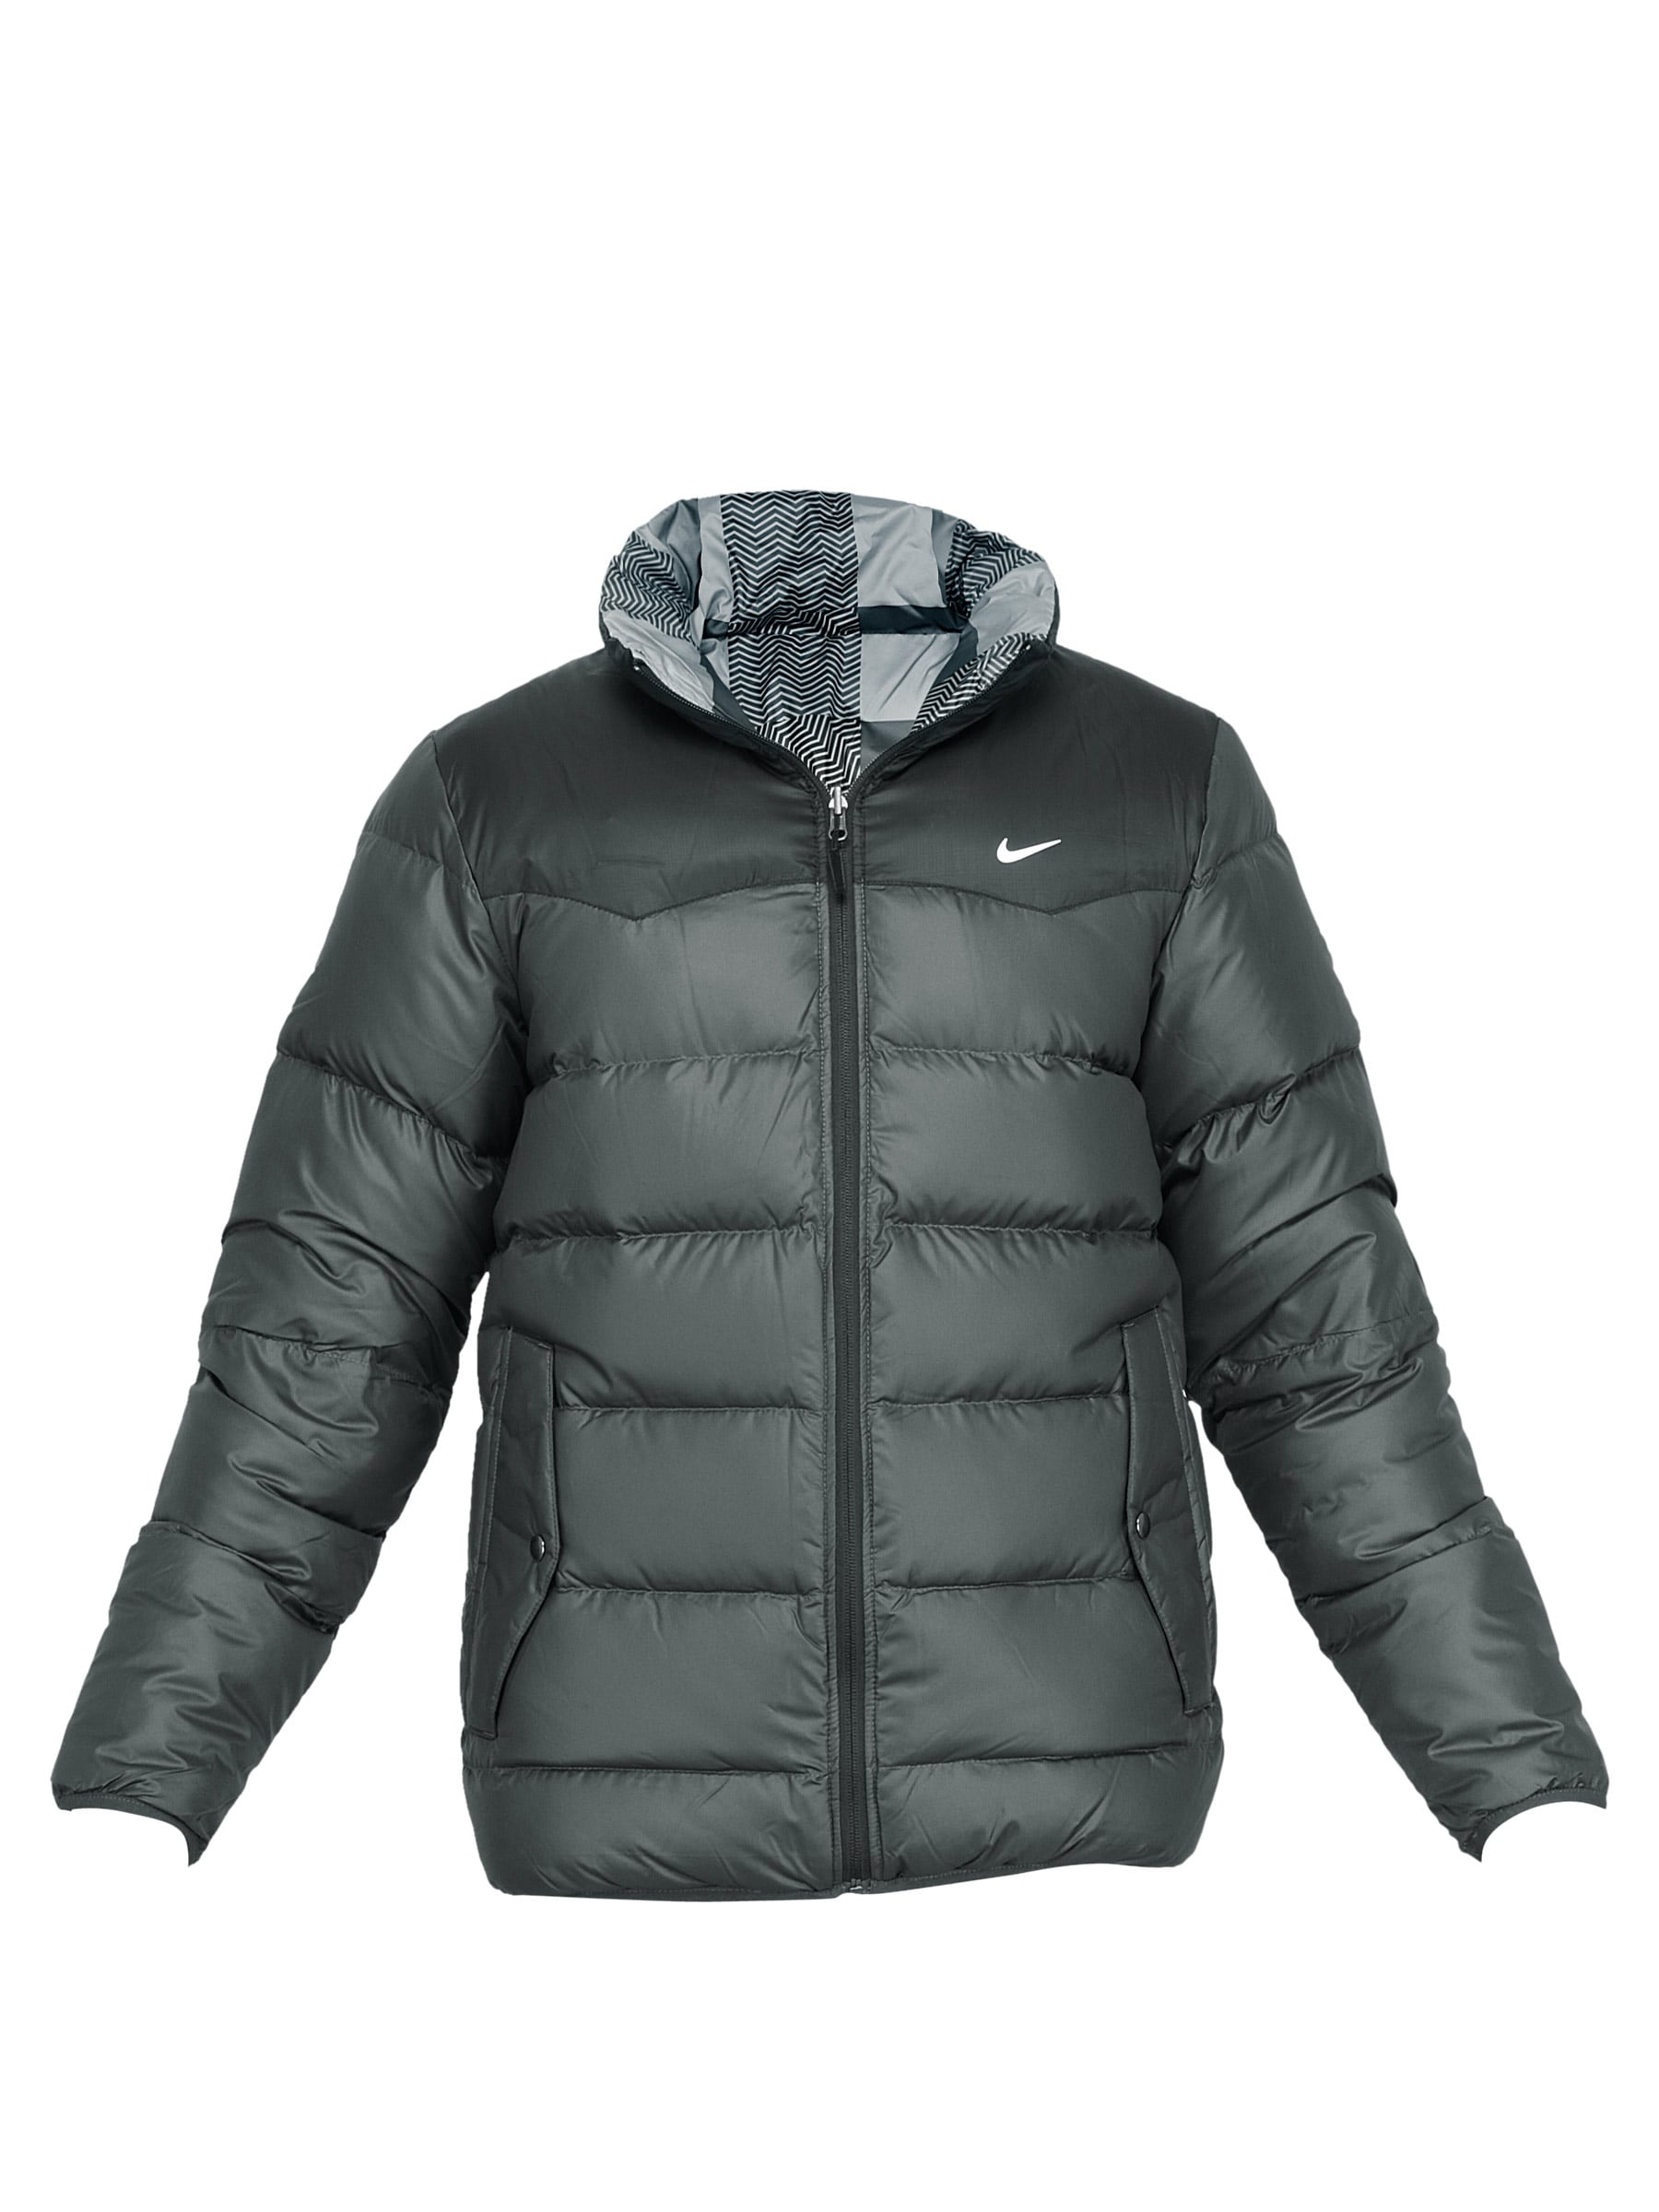 Nike Men Solid Grey Jacket